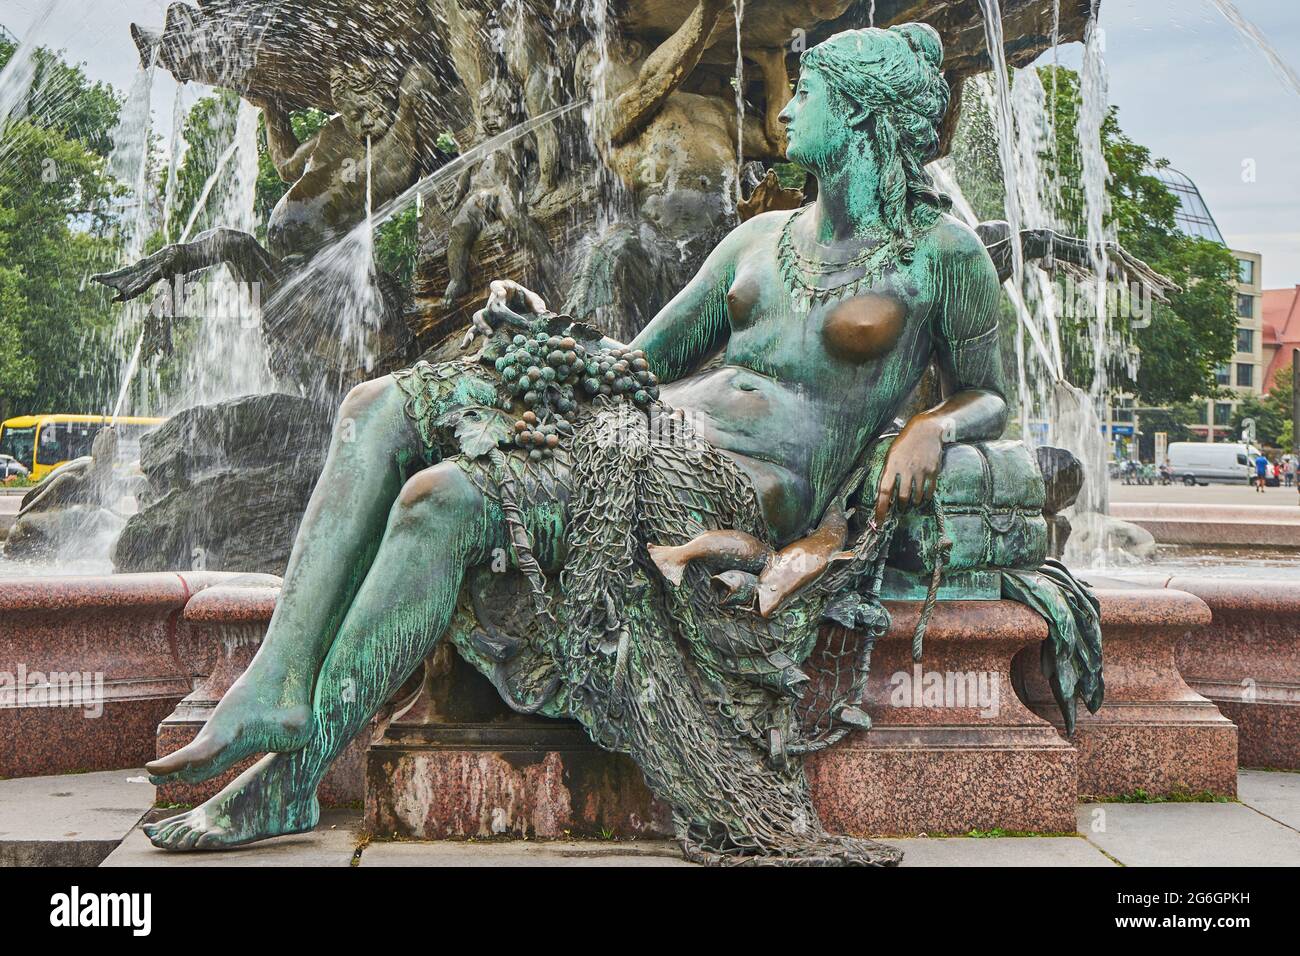 Frauenfigur, gefördert den Fluss Rhein, Neptunbrunnen, Schlossbrunnen oder Begasbrunnen, von Reinhold Begas, Berlin-Mitte, Berlin, Deutschland Stockfoto